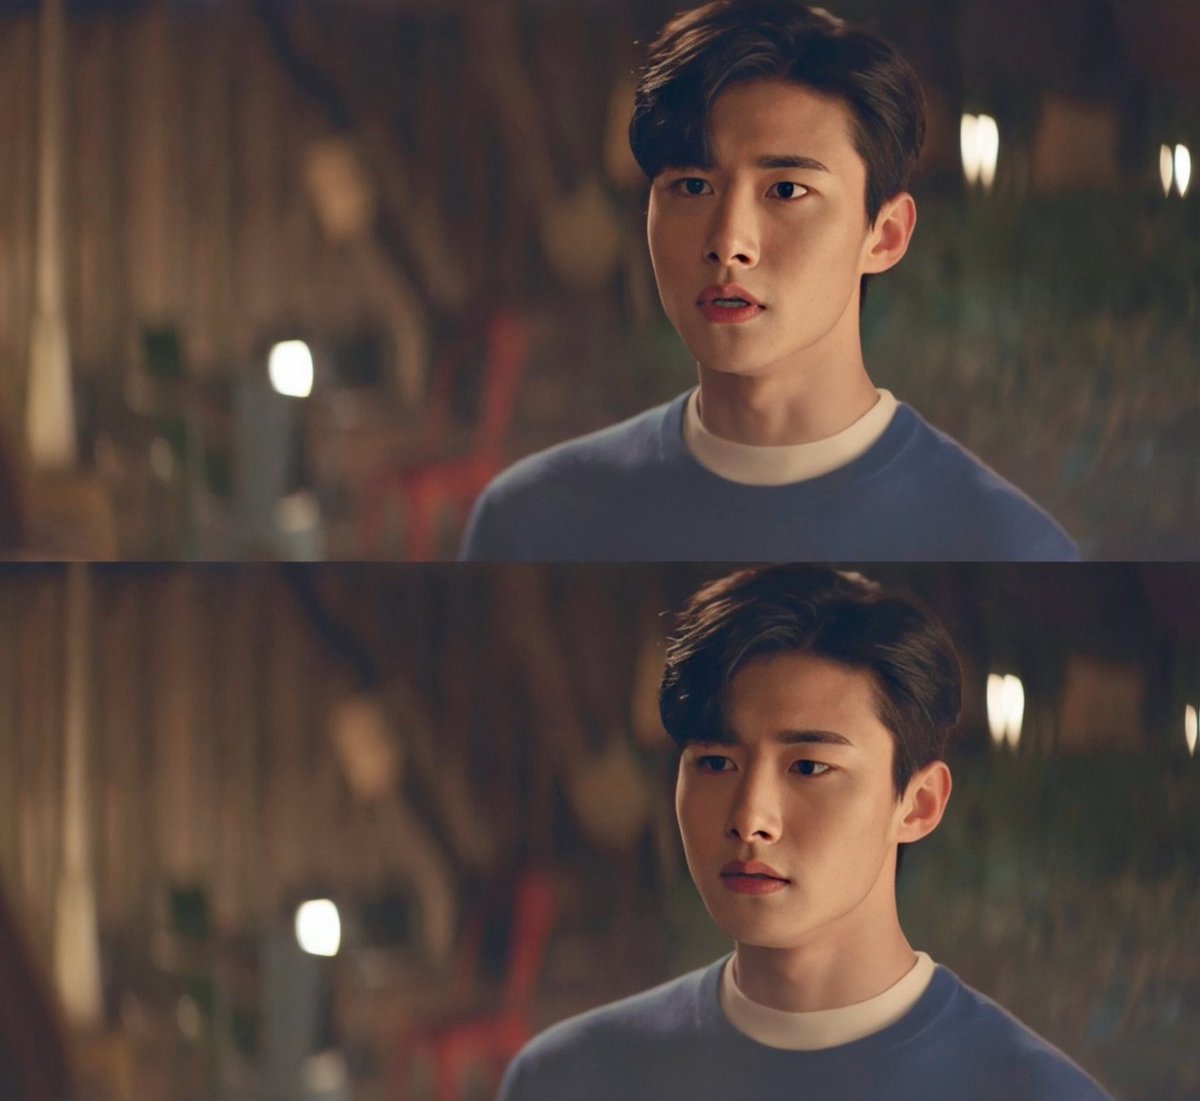 seojihoon looks soooo handsome in blue sweater, could you please be my boyfriend?